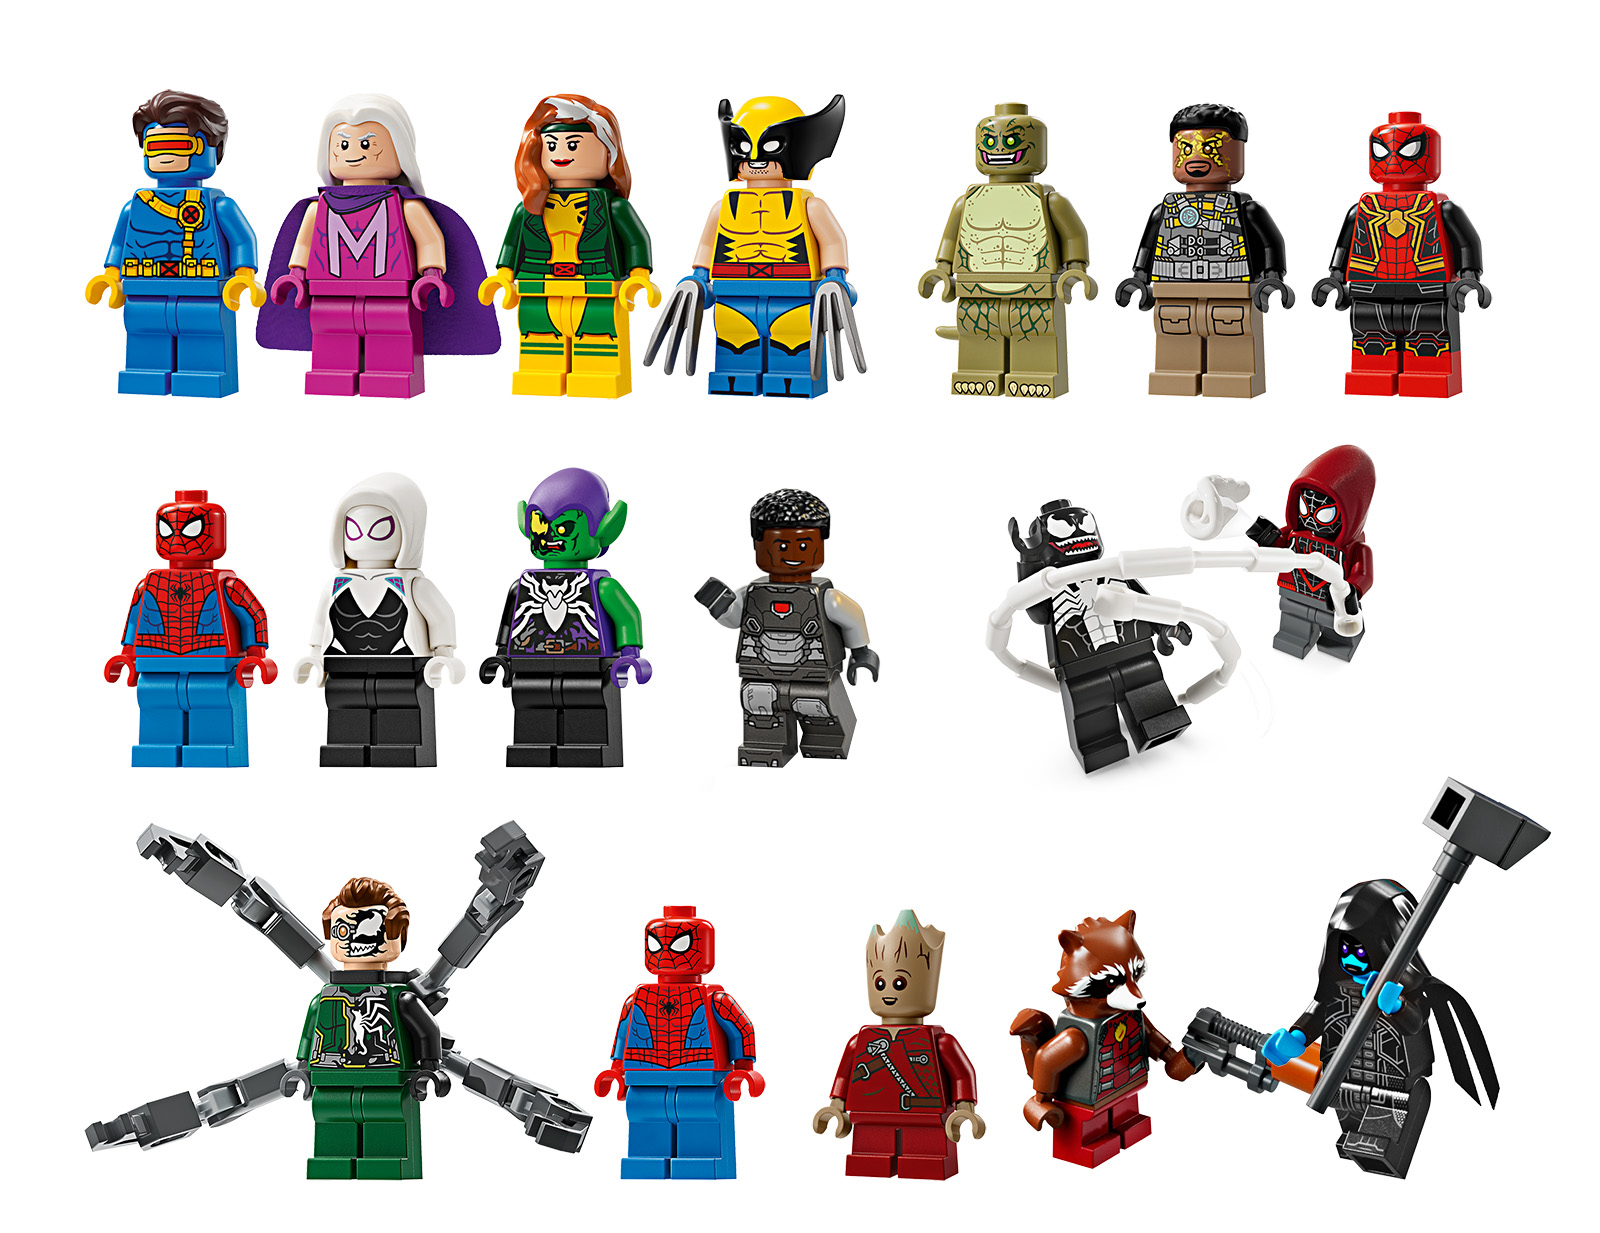  Lego 76282 Super Heroes Marvel Rocket & Baby Groot : Toys &  Games